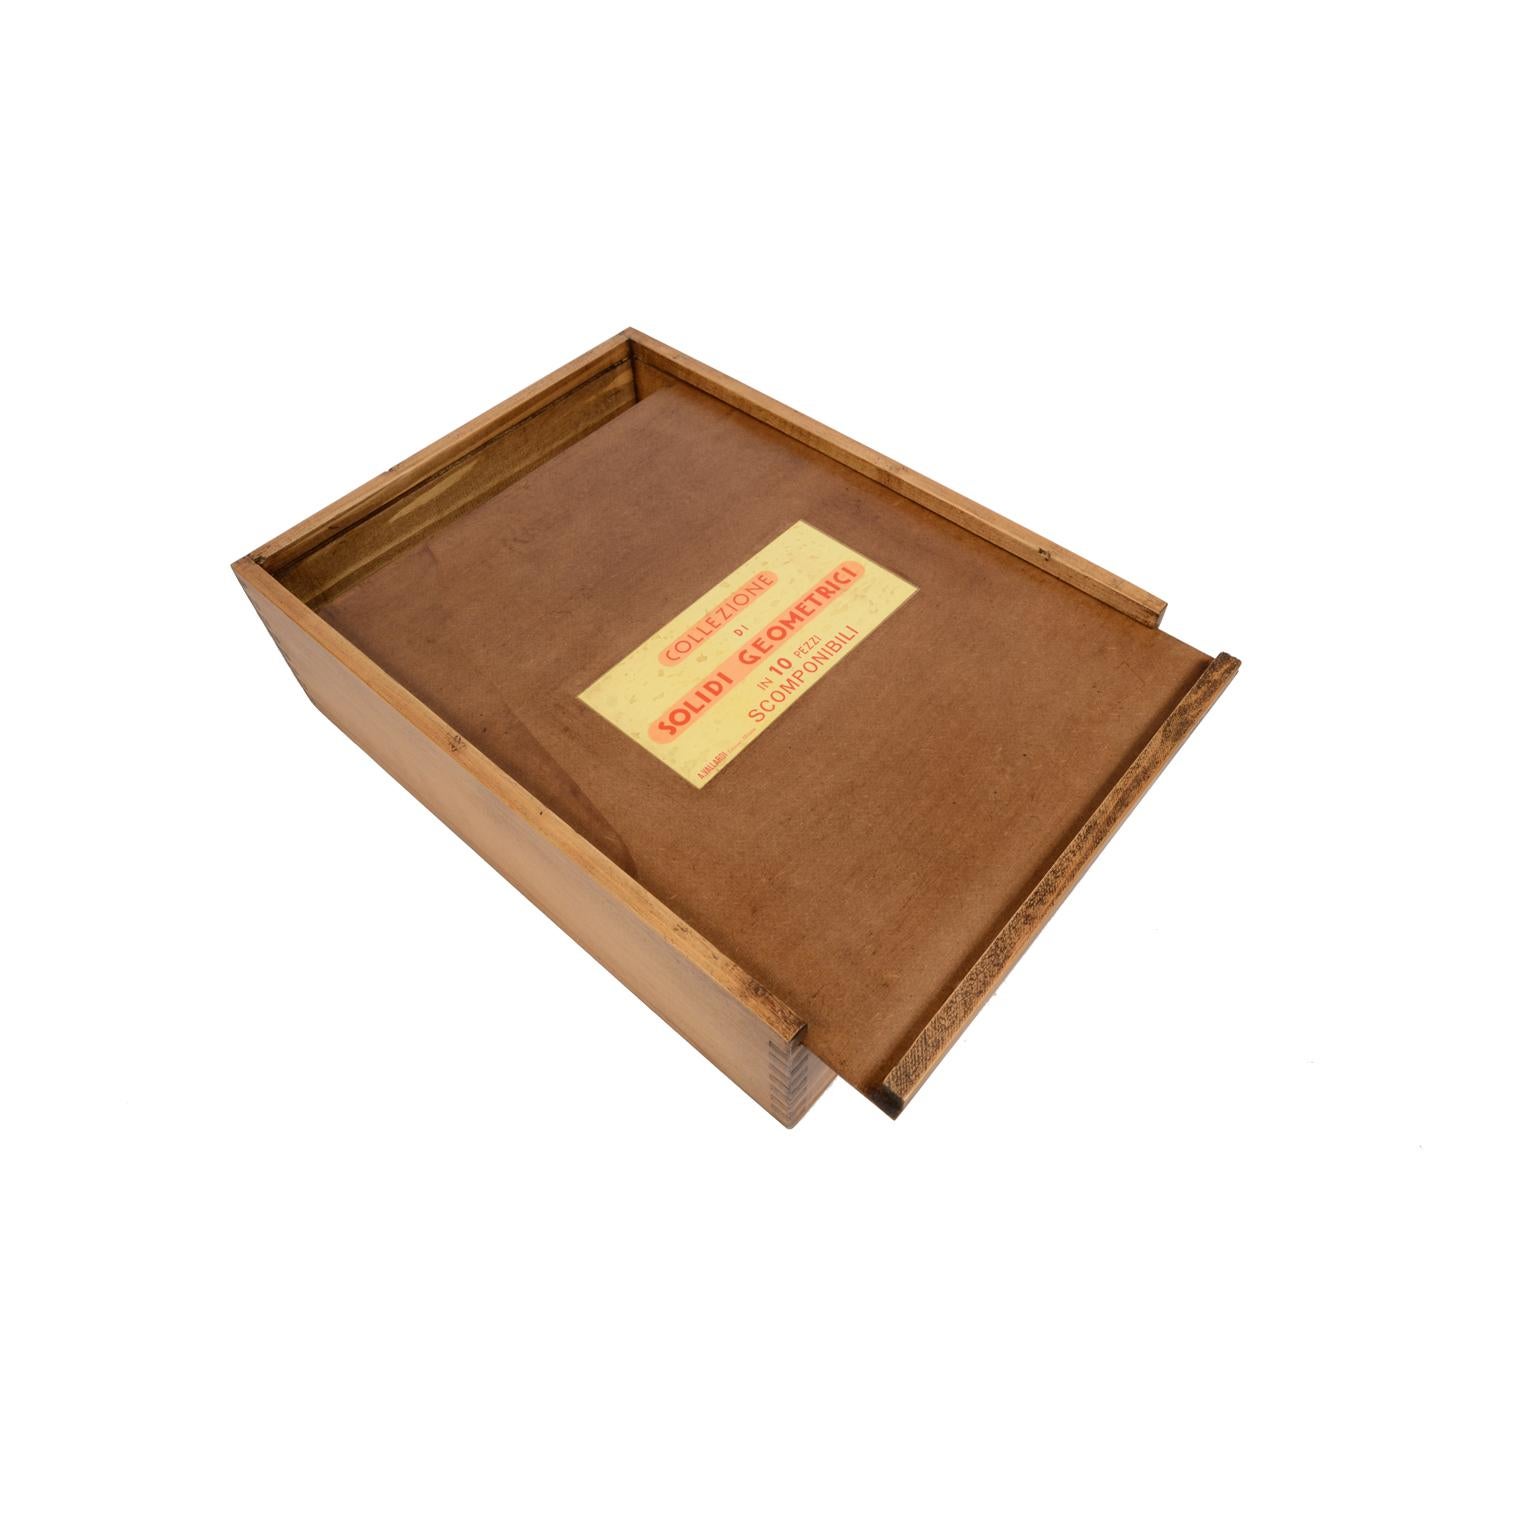 Box Containing 10 Dismountable Wooden Geometric Solids Italy Vallardi, 1963 11